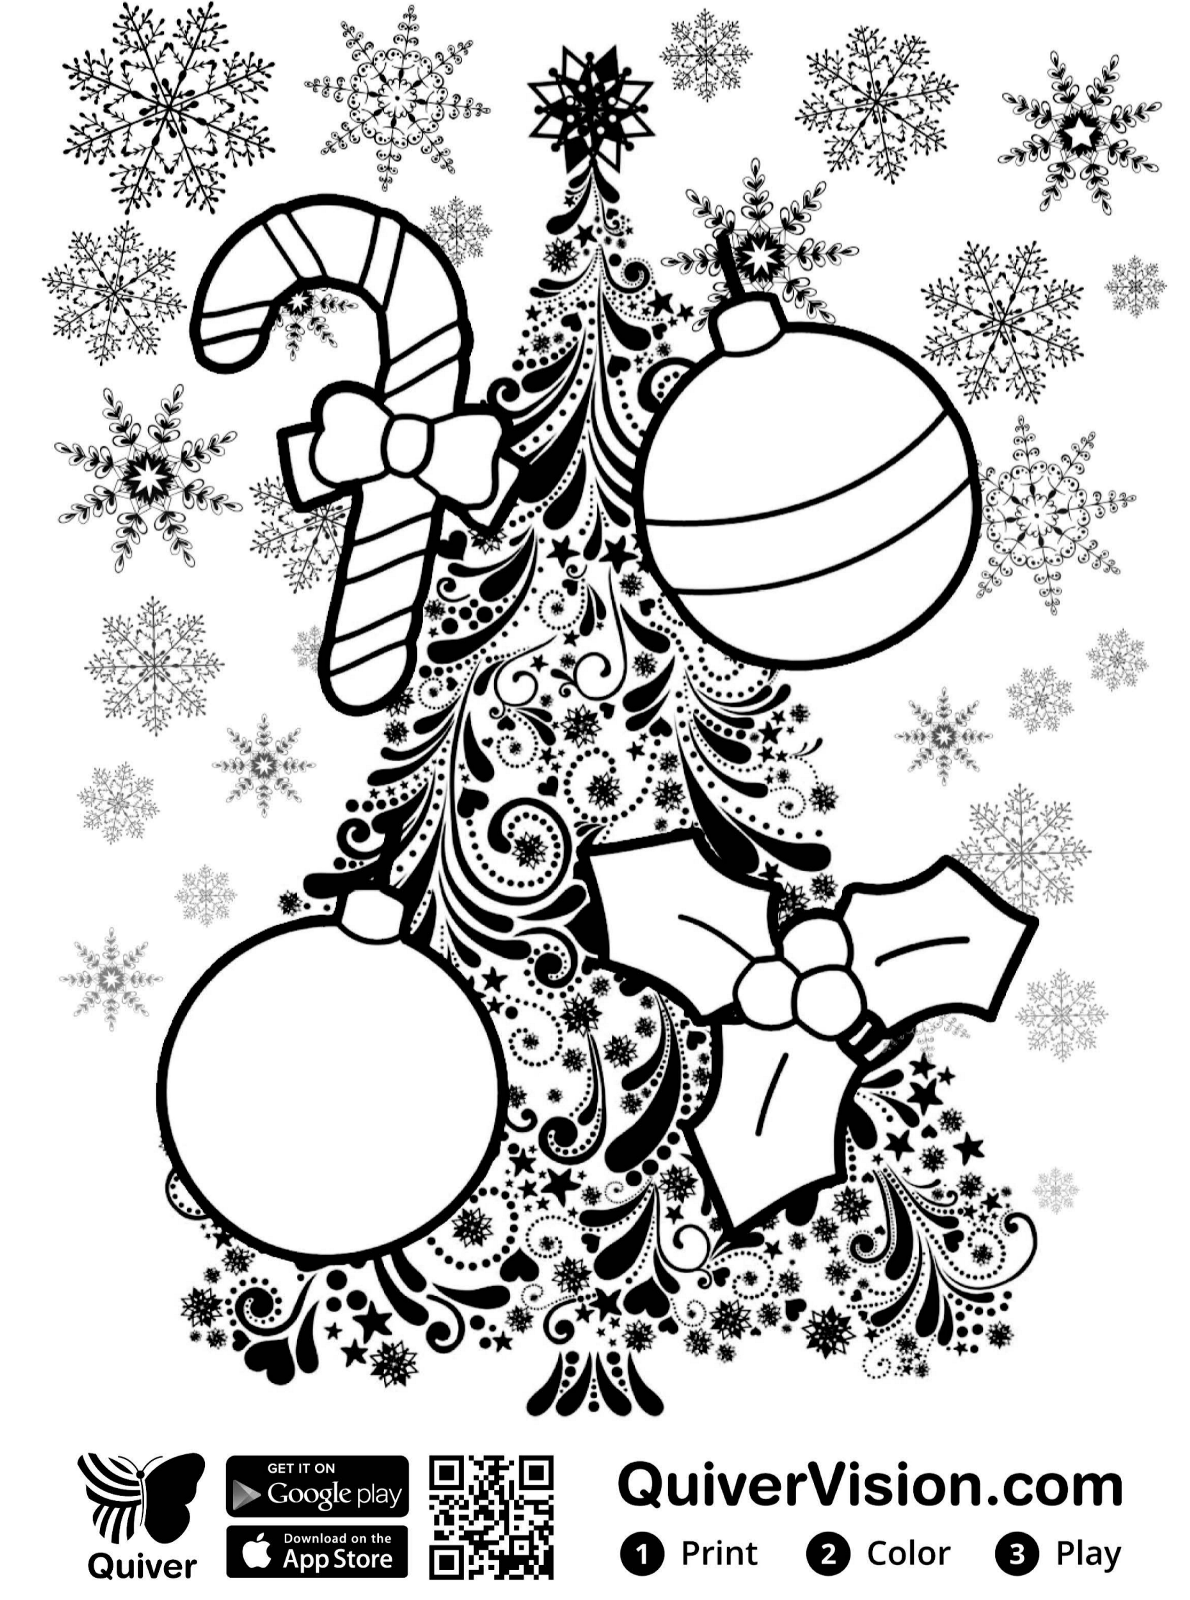 Kids-n-fun.com | Coloring page Quiver Christmas
 Christmas Presents Coloring Sheets